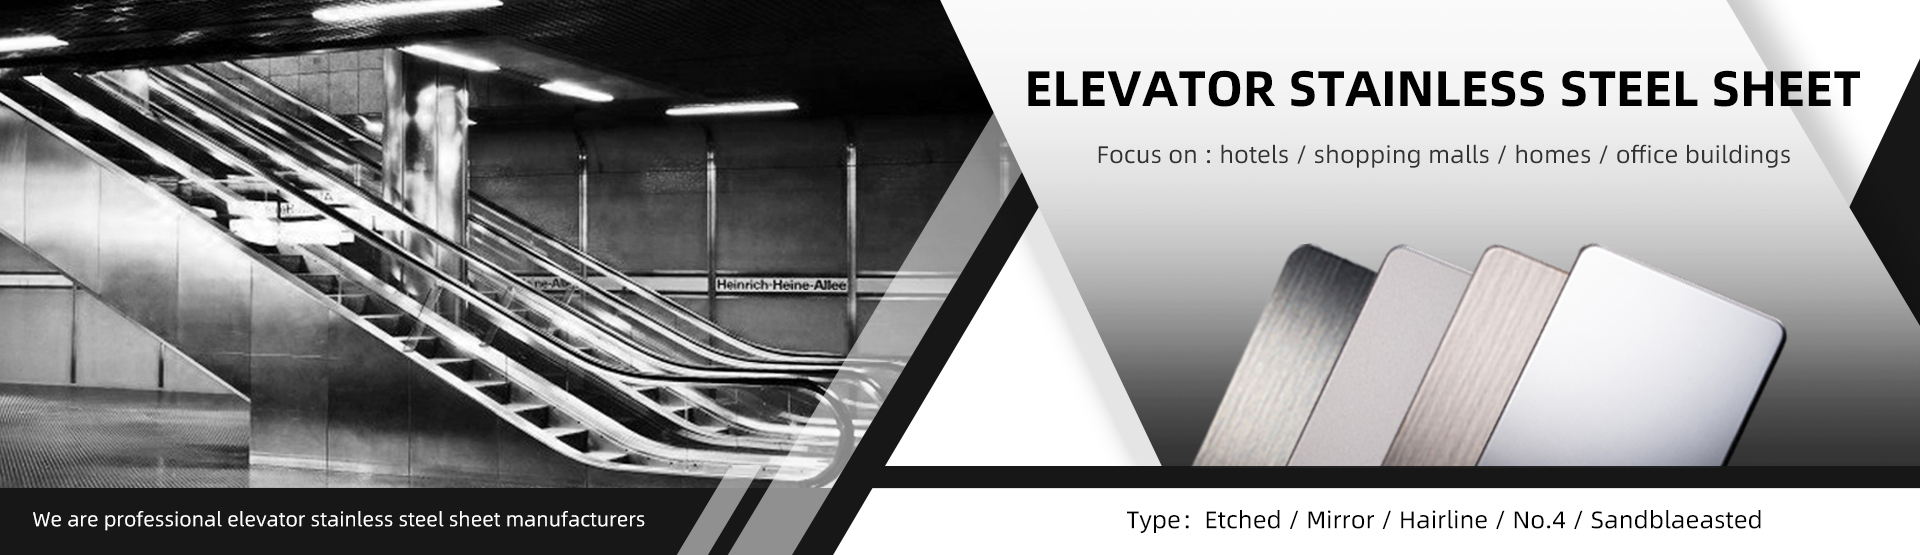 Elevator stainless steel sheet_banner